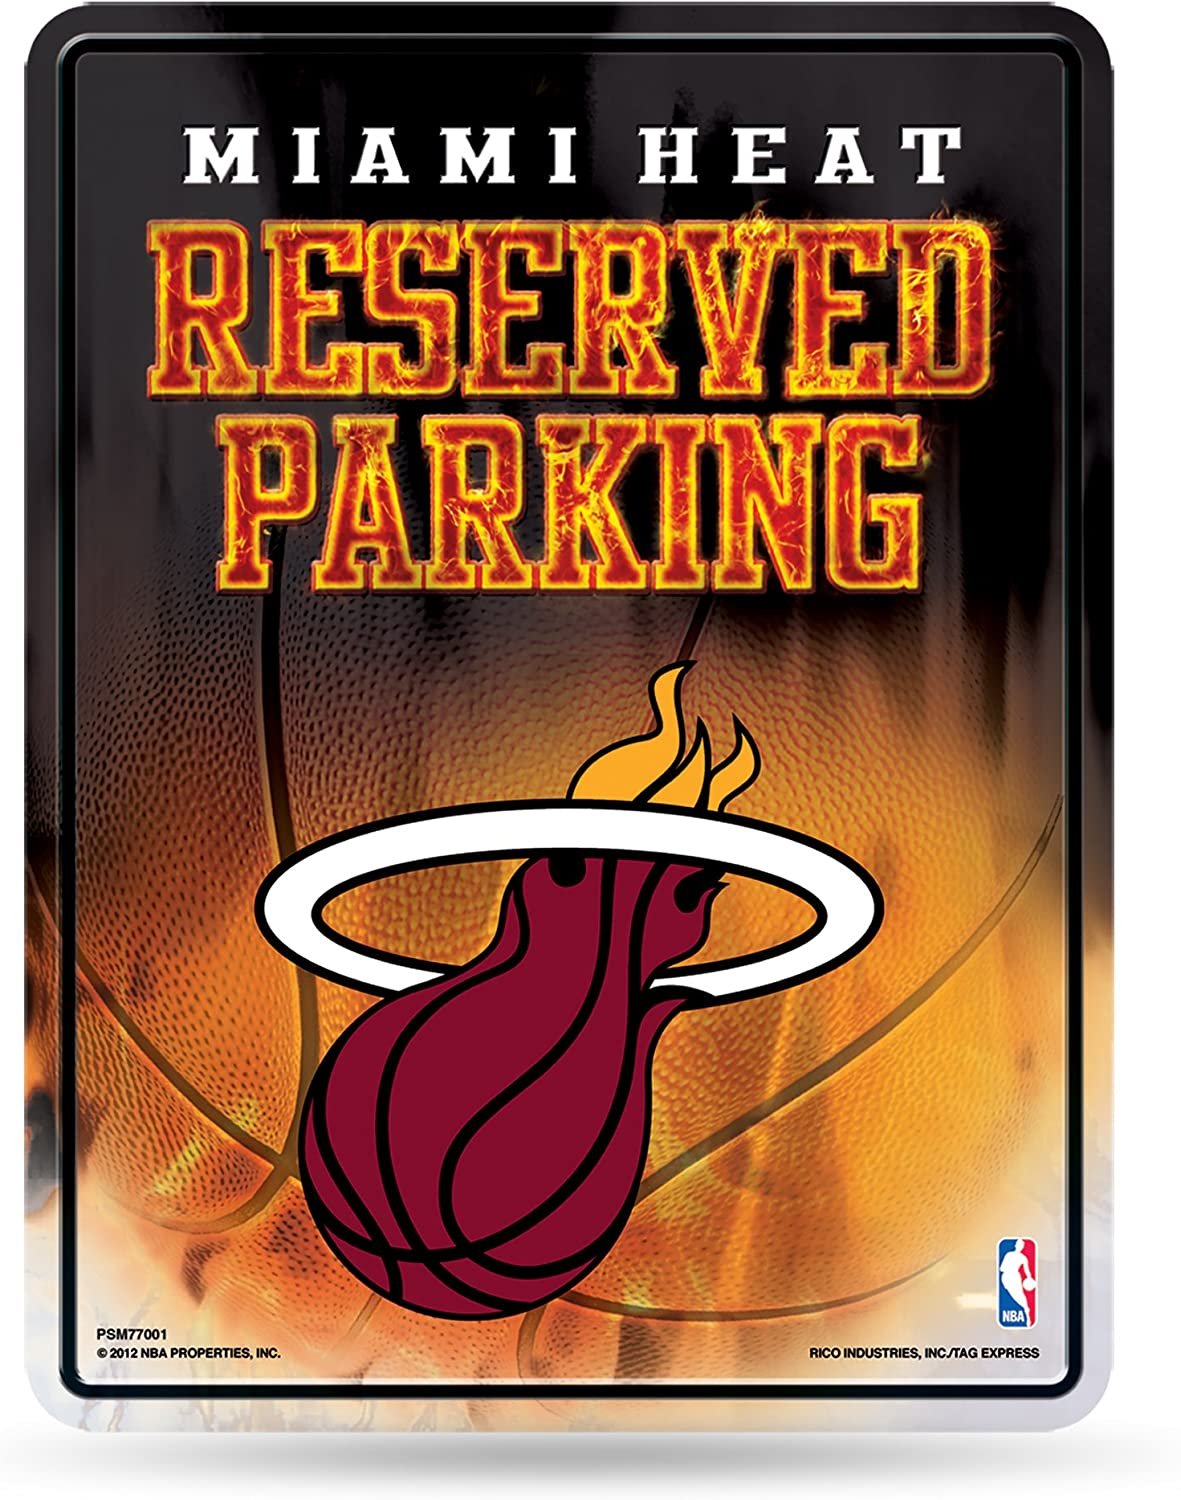 Miami Heat Metal Parking Sign